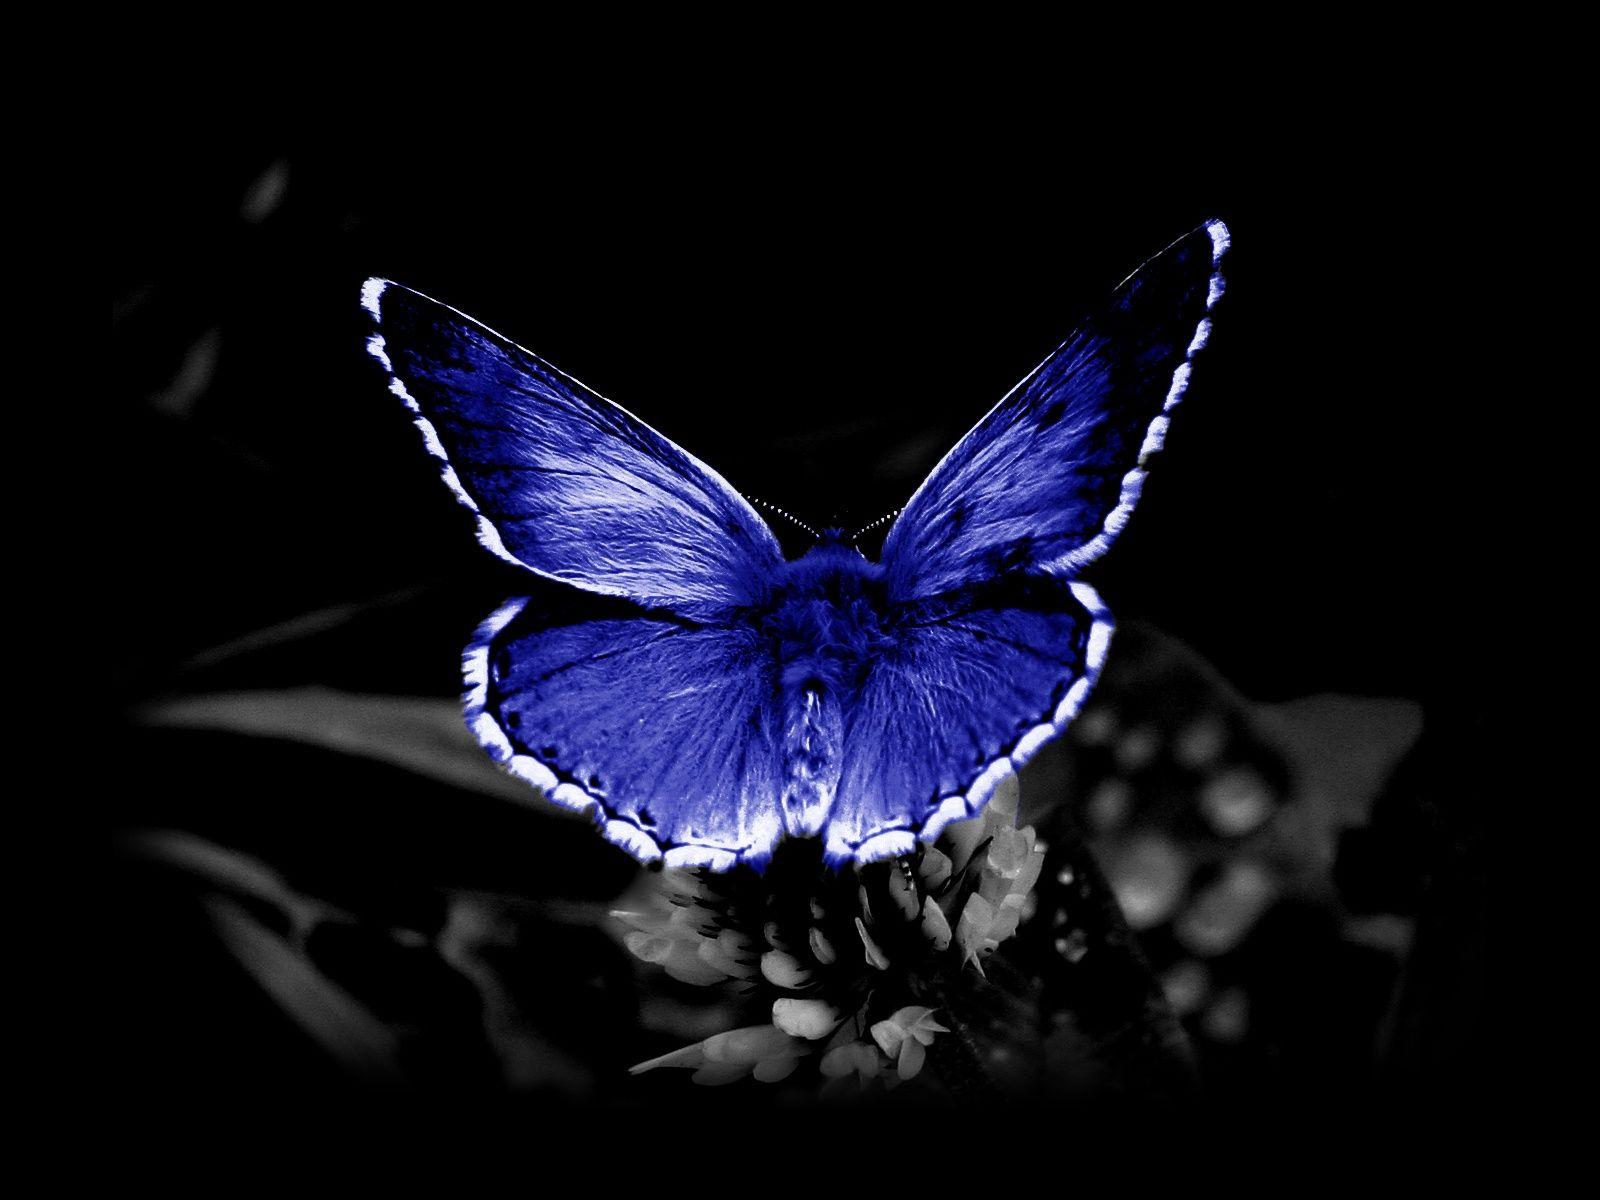 1080p HD Butterfly Wallpaper Download High Quality Desktop, iphone